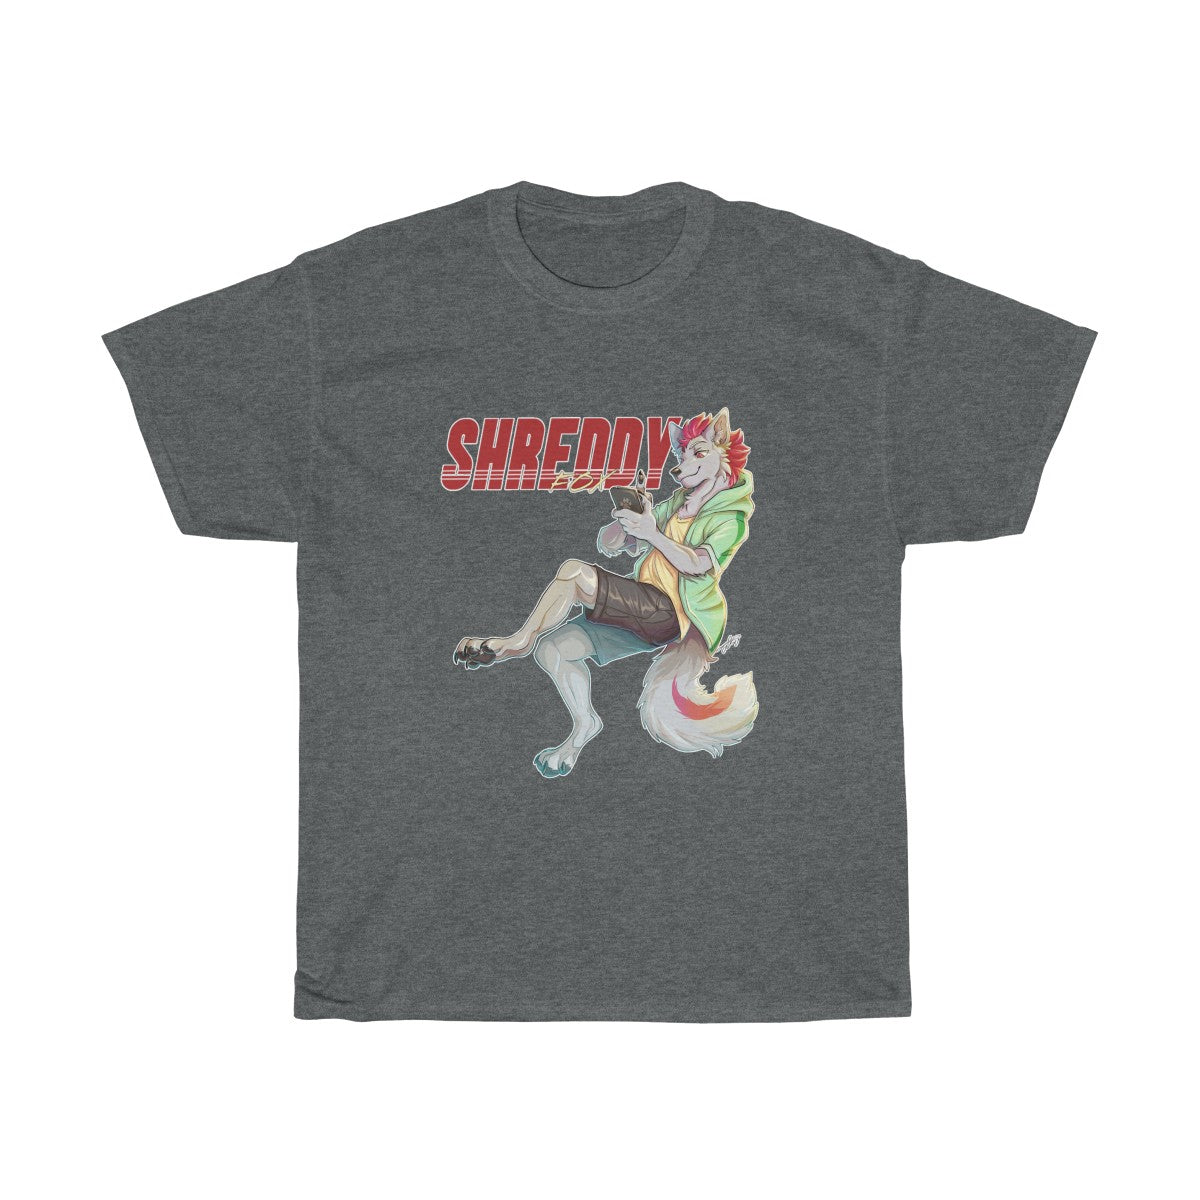 Scrolling - T-Shirt T-Shirt Shreddyfox Dark Heather S 